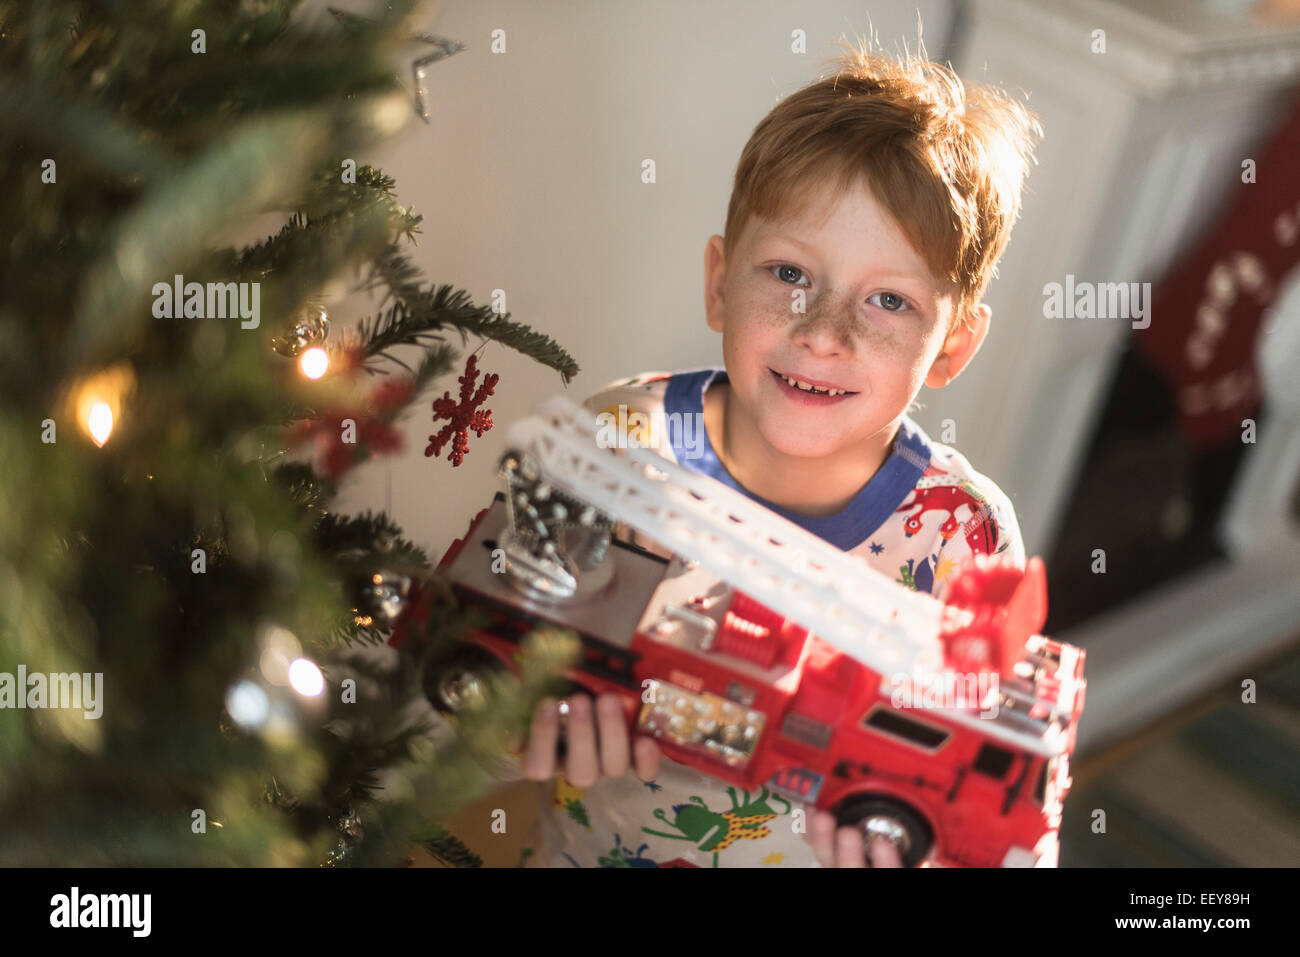 Portrait of boy (6-7) holding toy firetruck Stock Photo